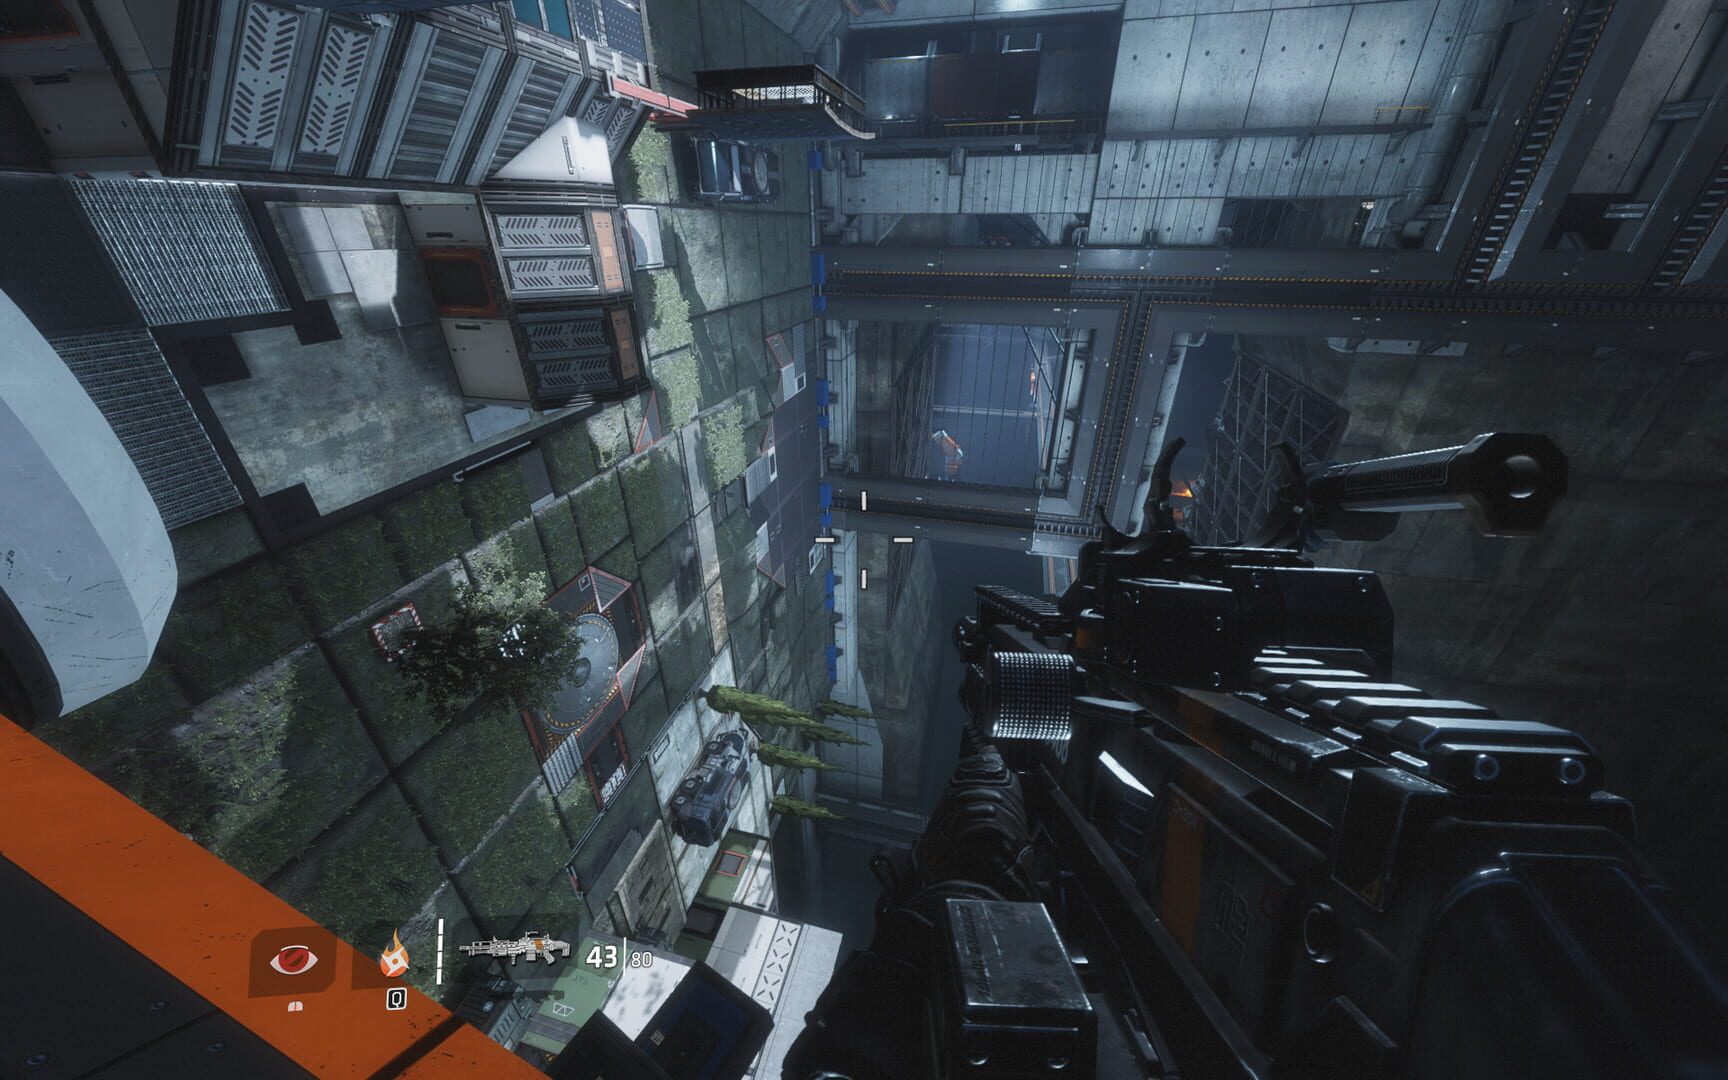 Screenshot for Titanfall 2